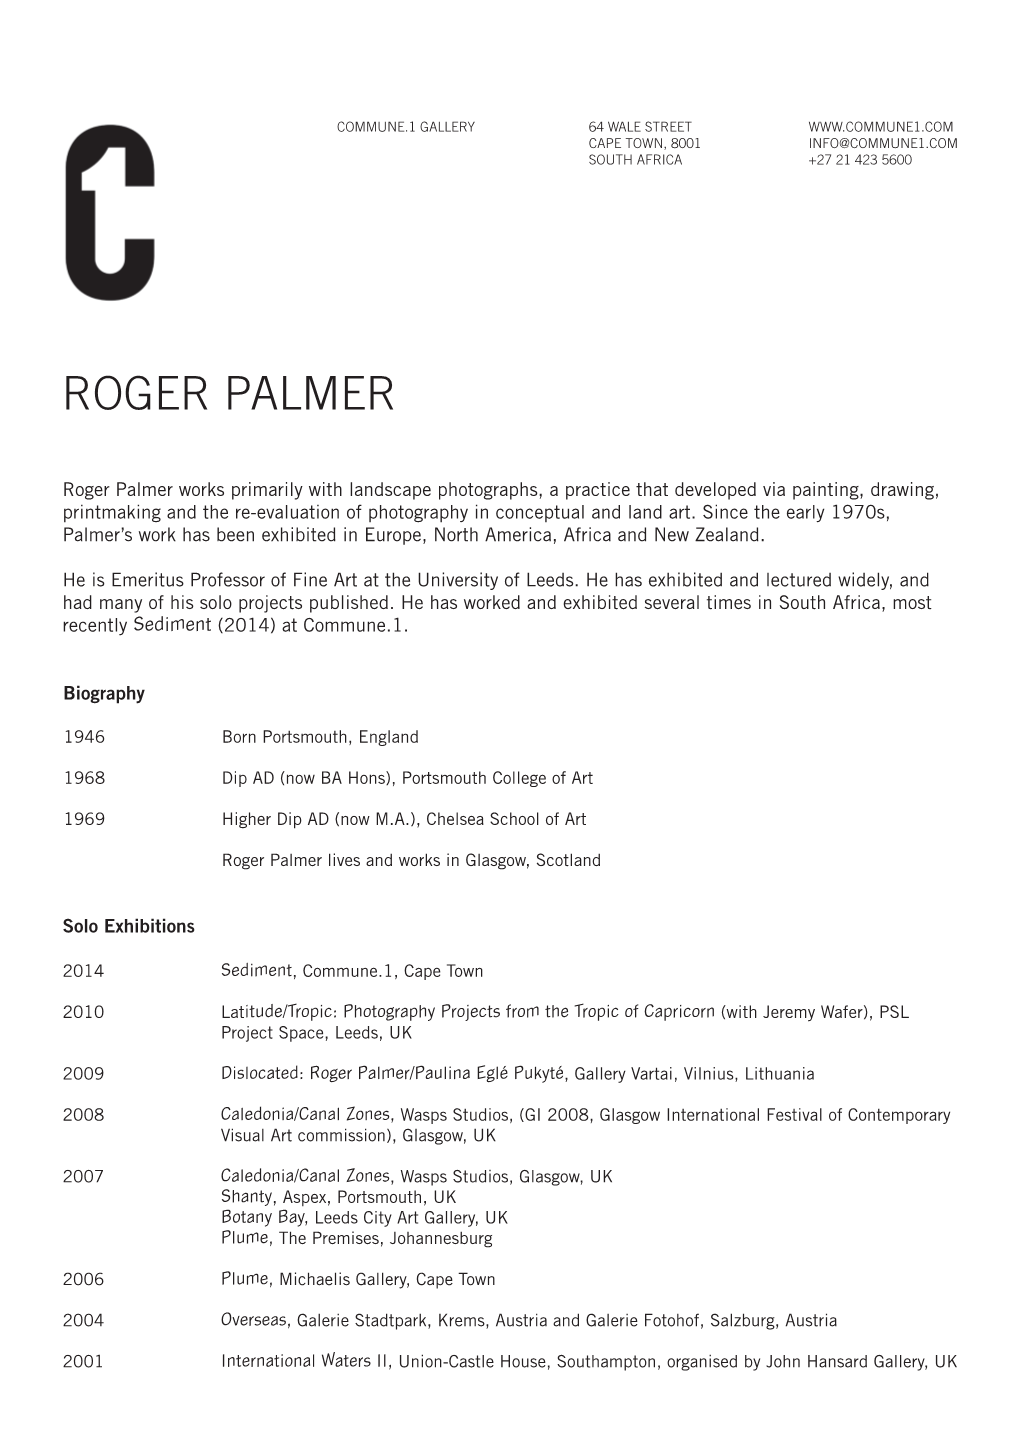 Roger Palmer